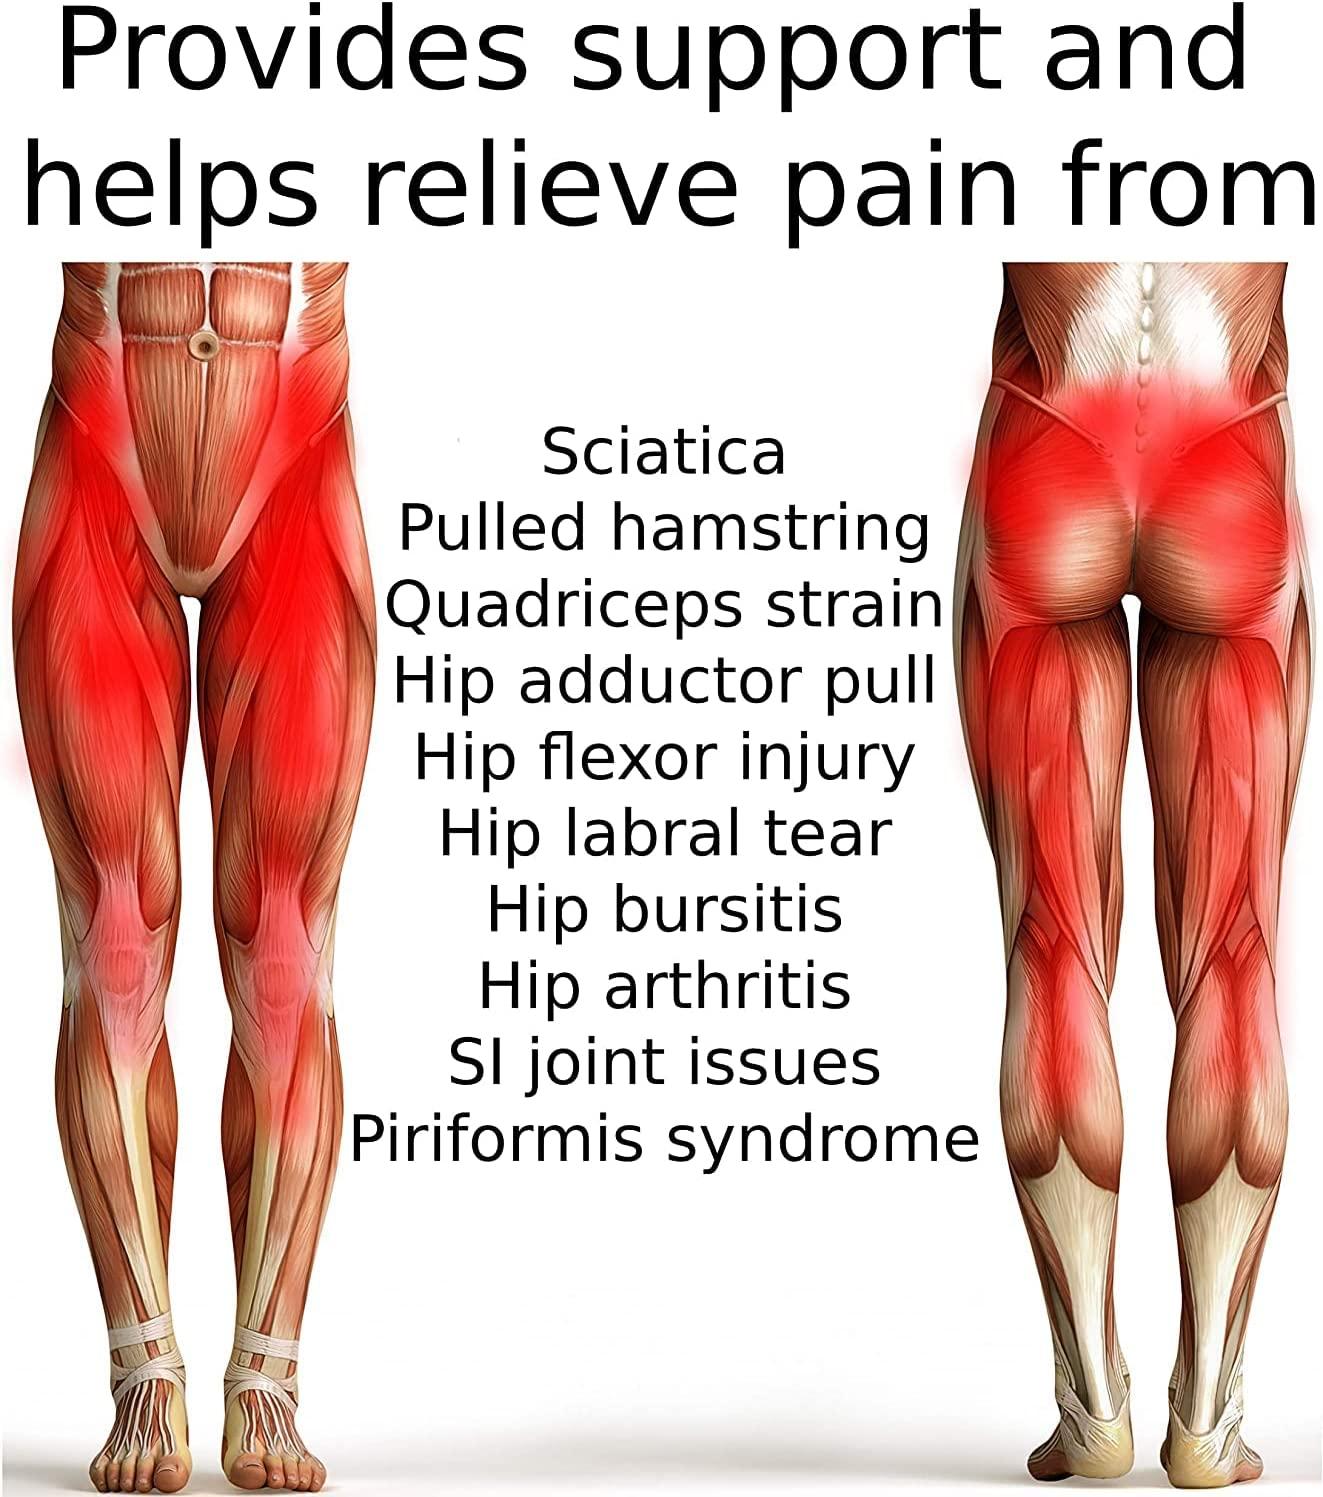 Hip Brace - Thigh Hamstring Sciatica Pain Relief Brace - Compression  Support Wrap for Hip Flexor Strain, Groin Pull, SI Joint, Arthritis,  Bursitis, Sciatic Nerve for Men, Women (Black)